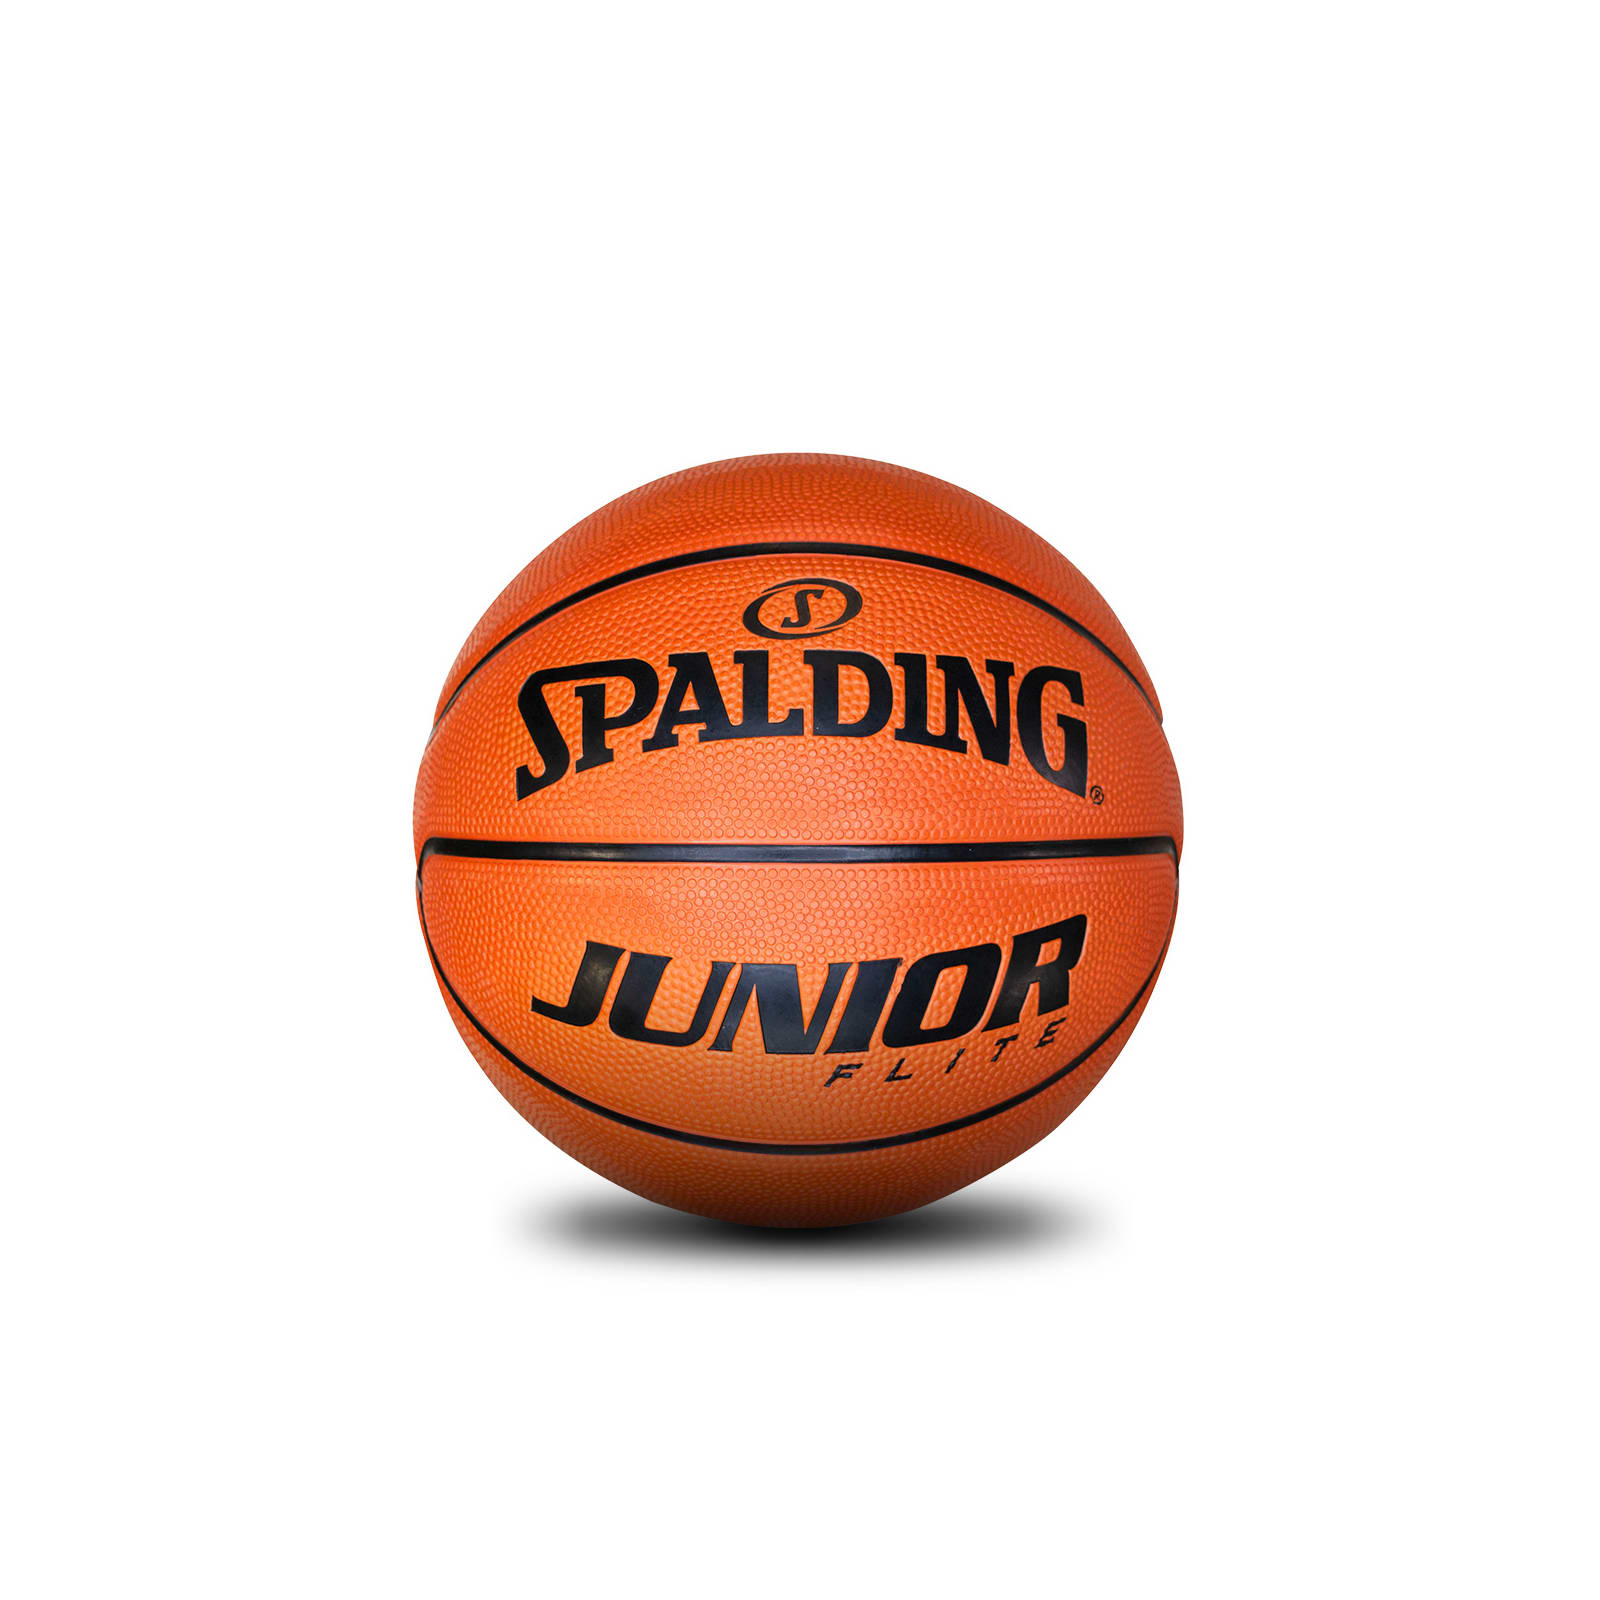 Junior Flight Rubber Basketball Size 4 Outdoor Ball From Spalding 